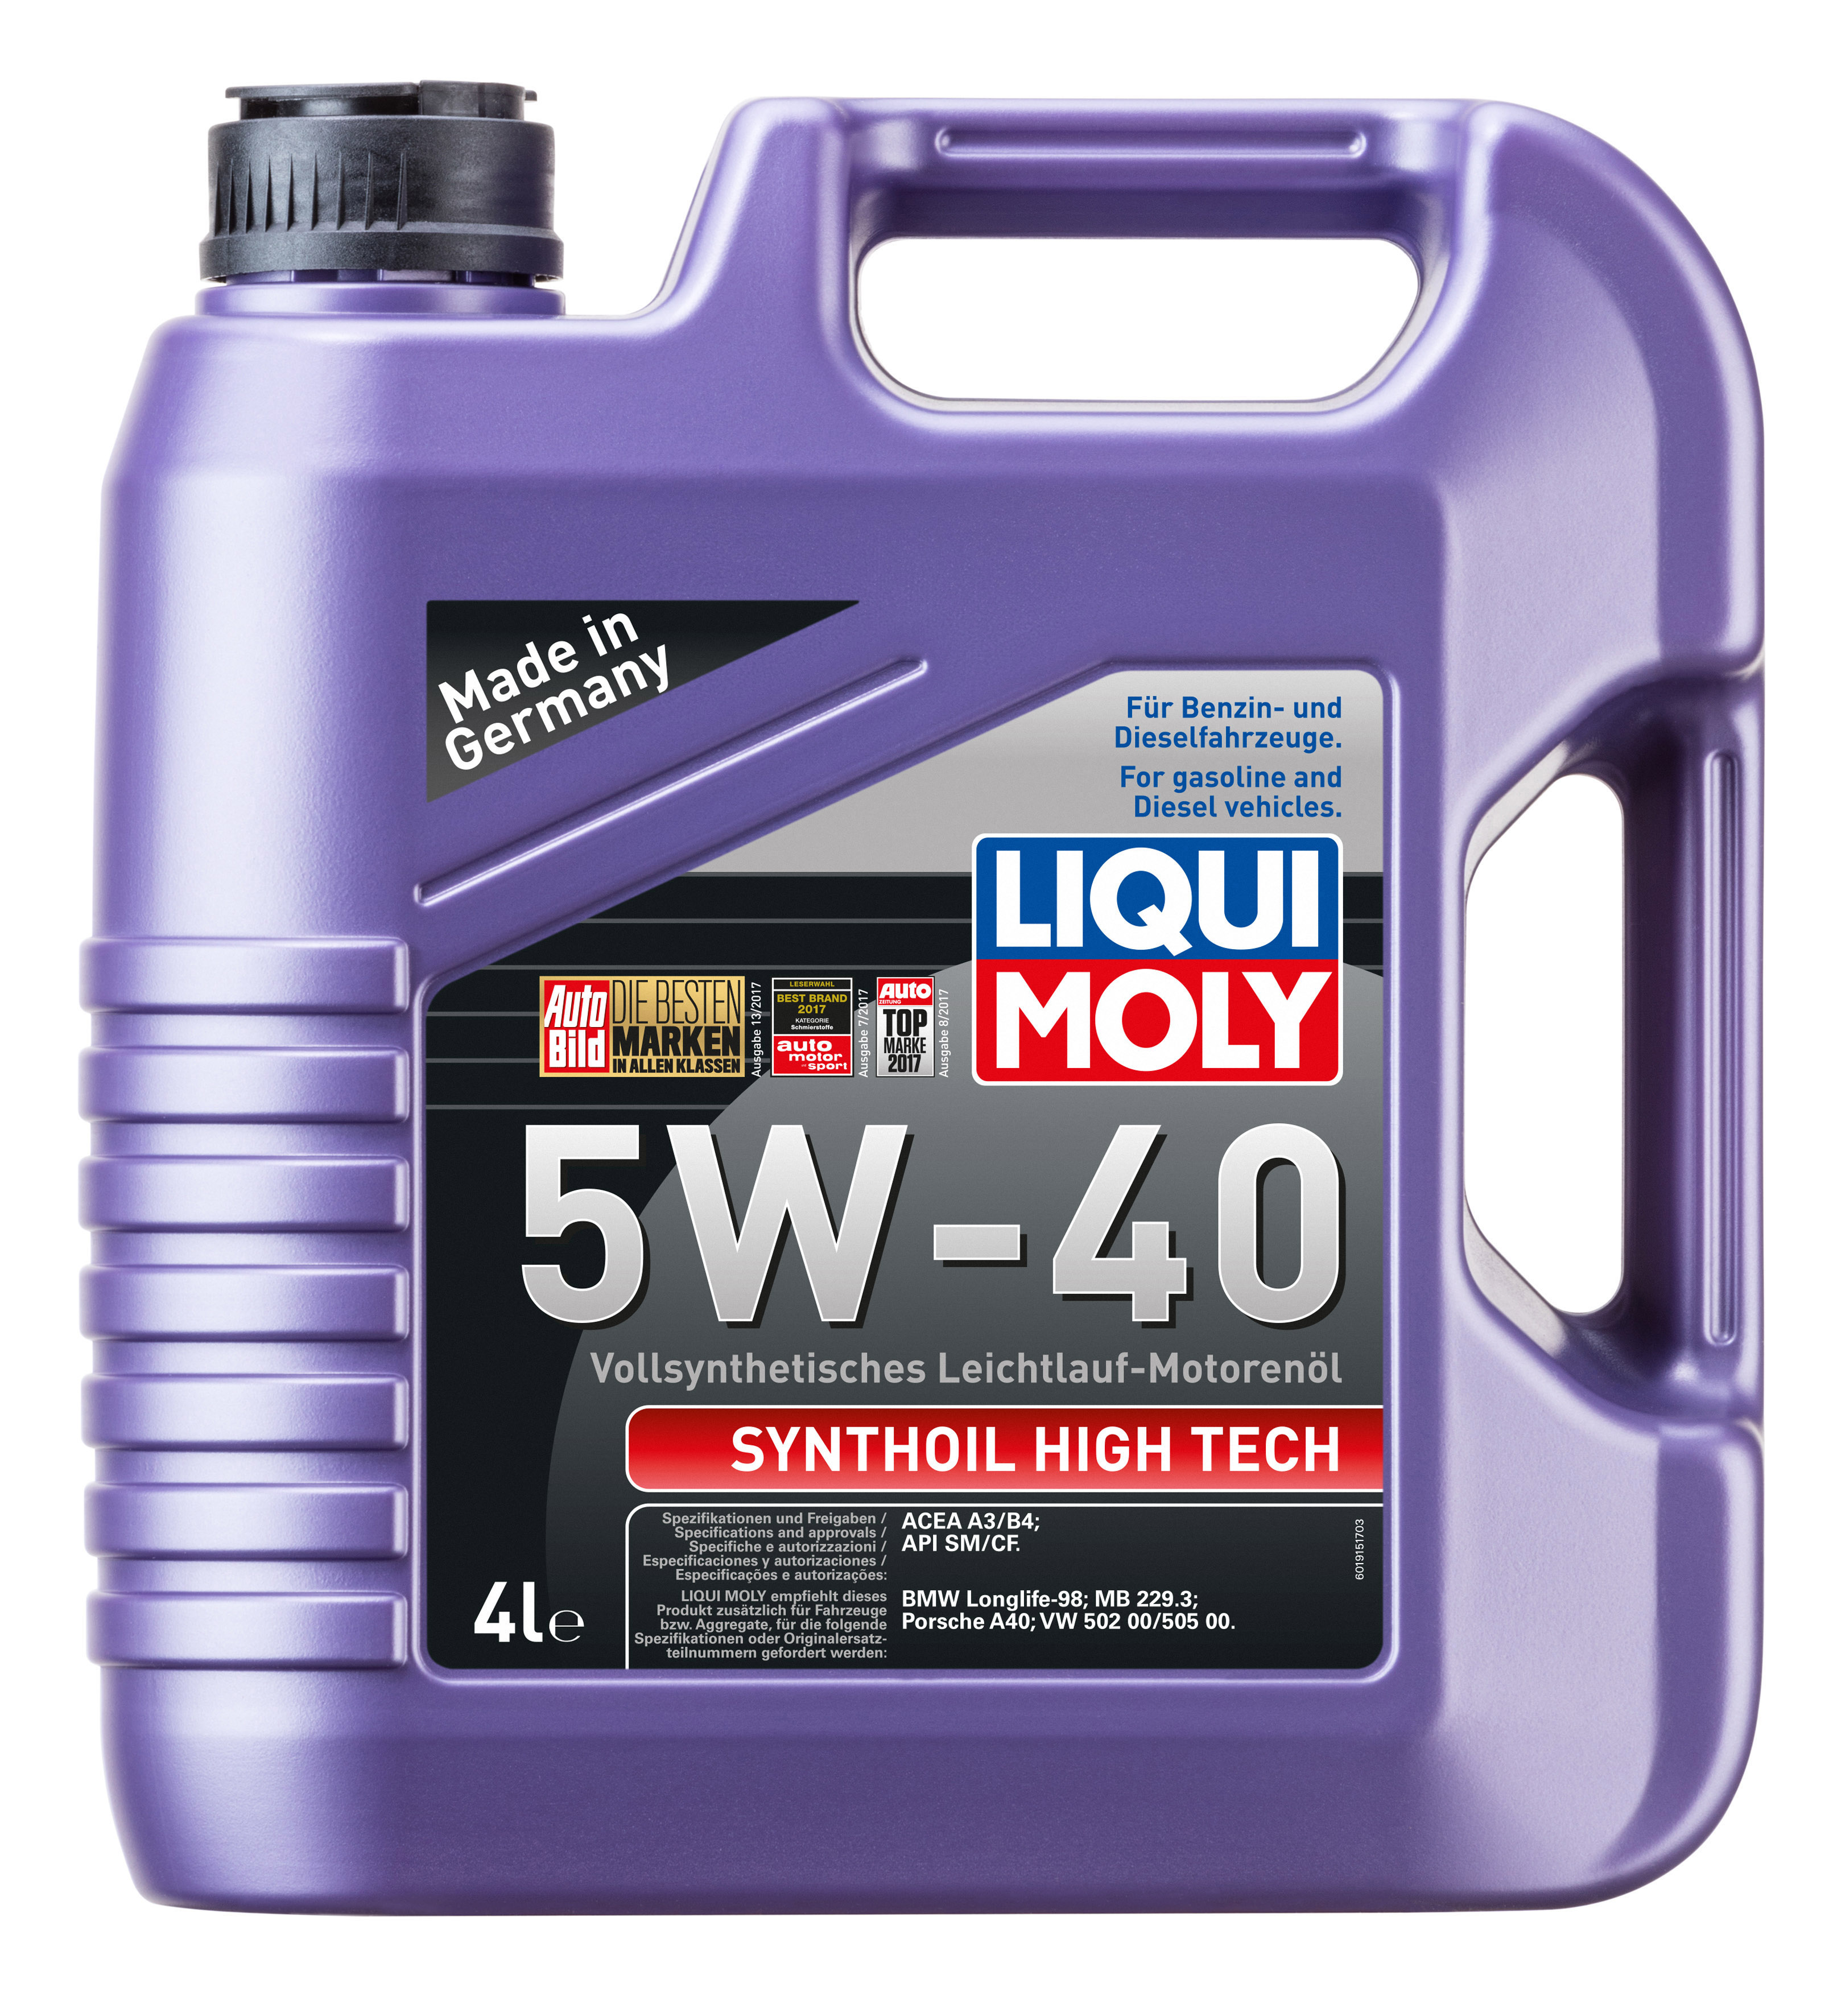 Синтетическое моторное масло Synthoil High Tech 5W-40, 4л